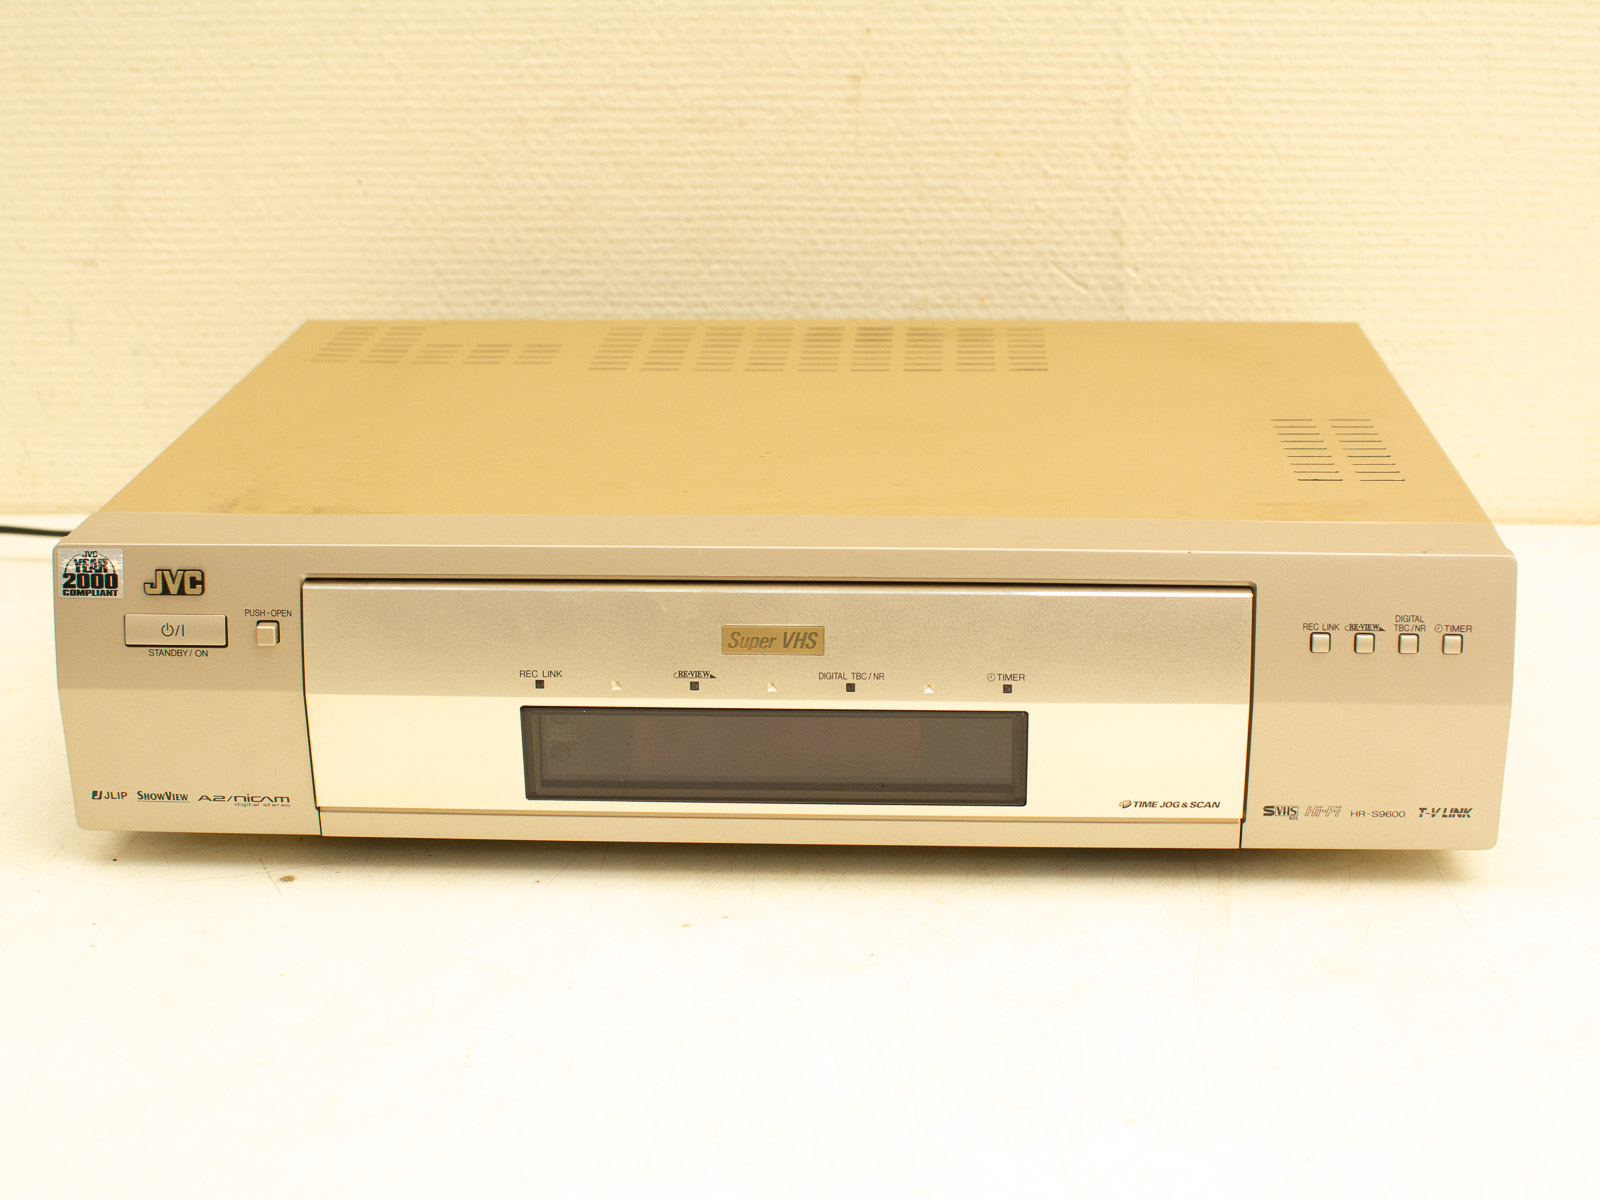 JVC super vhs video cassette recorder  32307